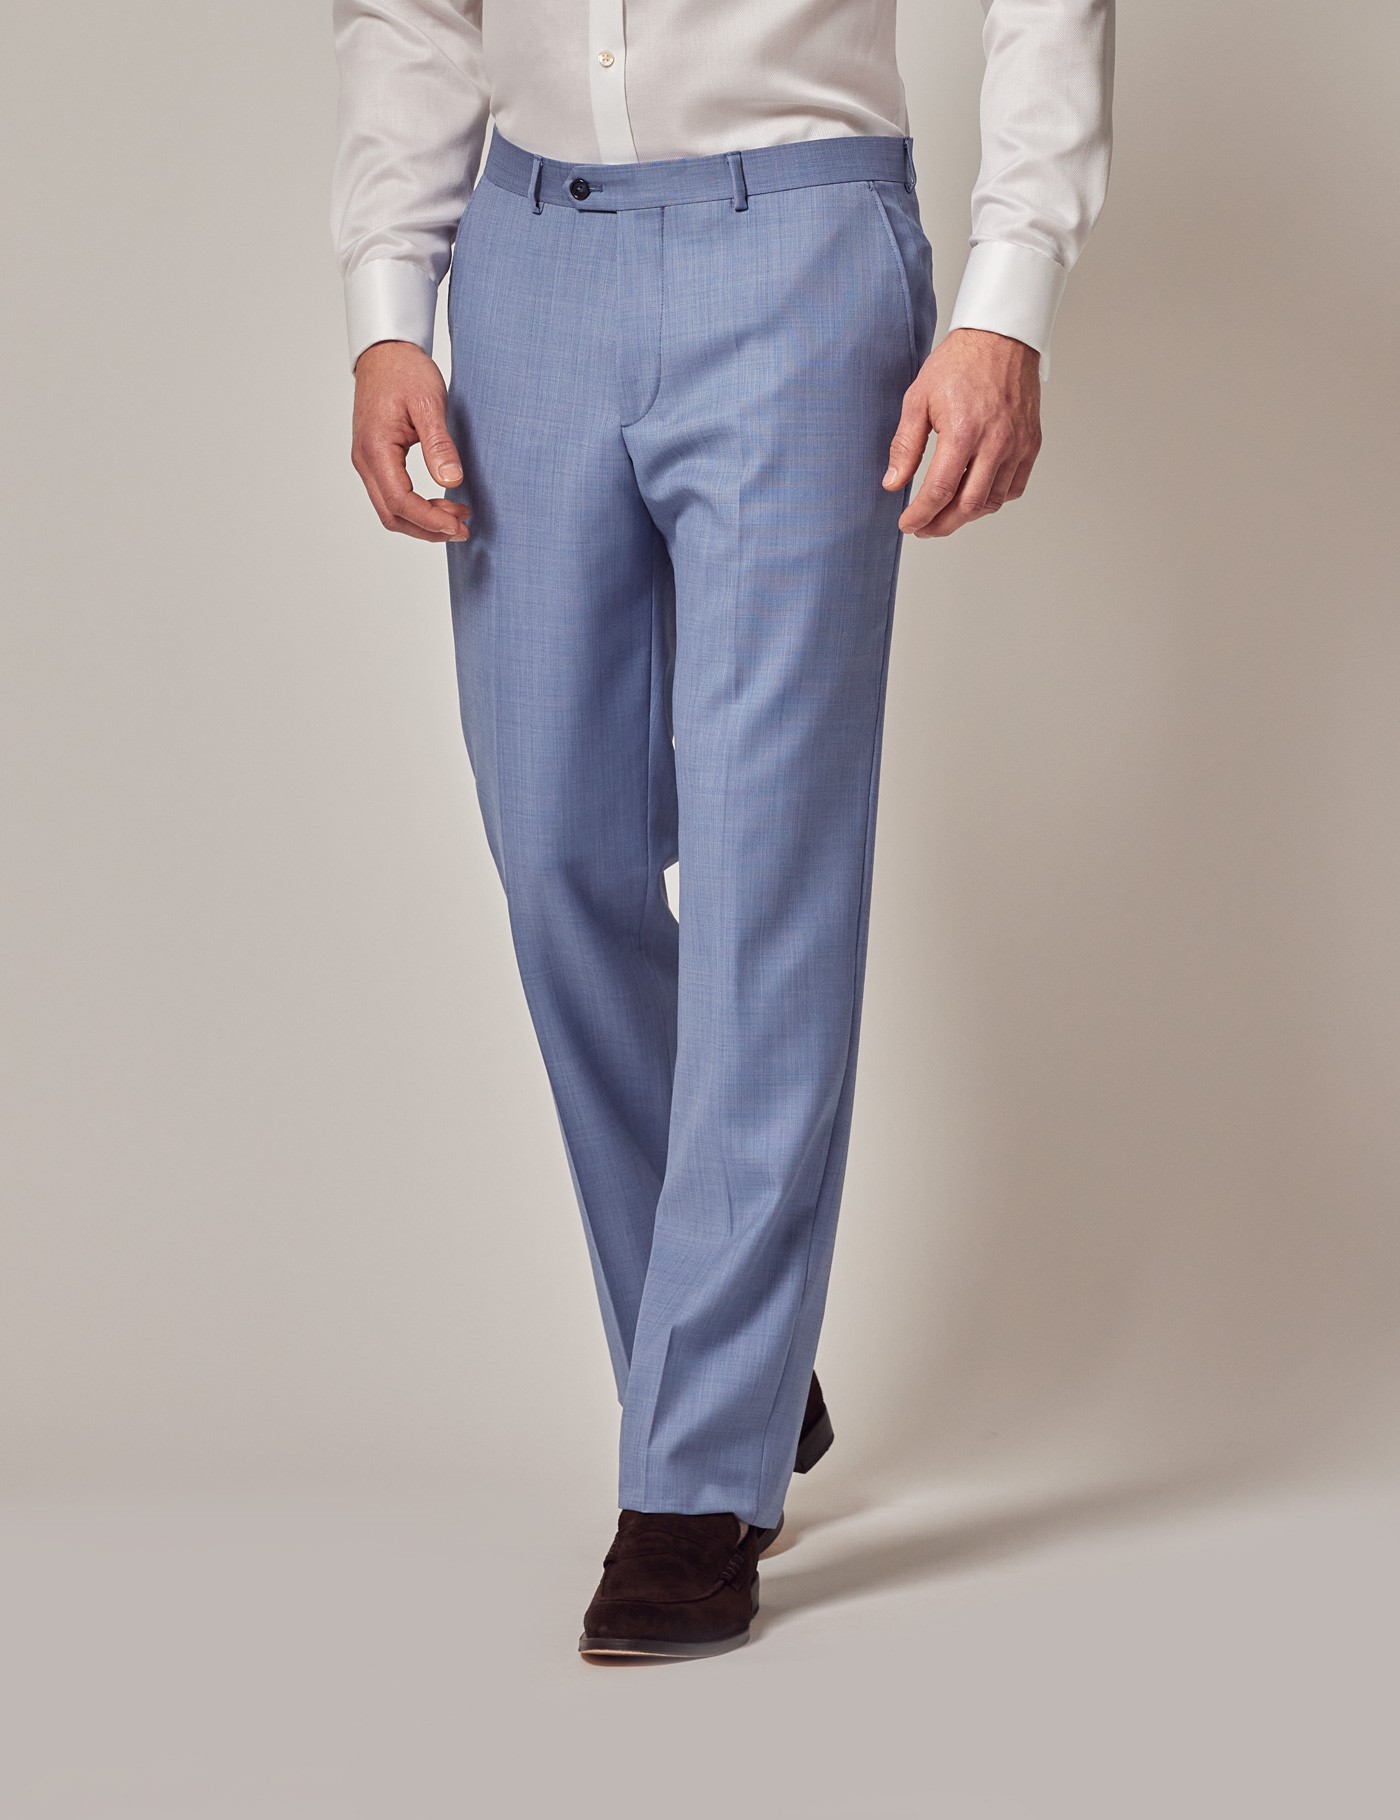 Mens Cream Linen Tailored Italian Suit Pants  1913 Collection